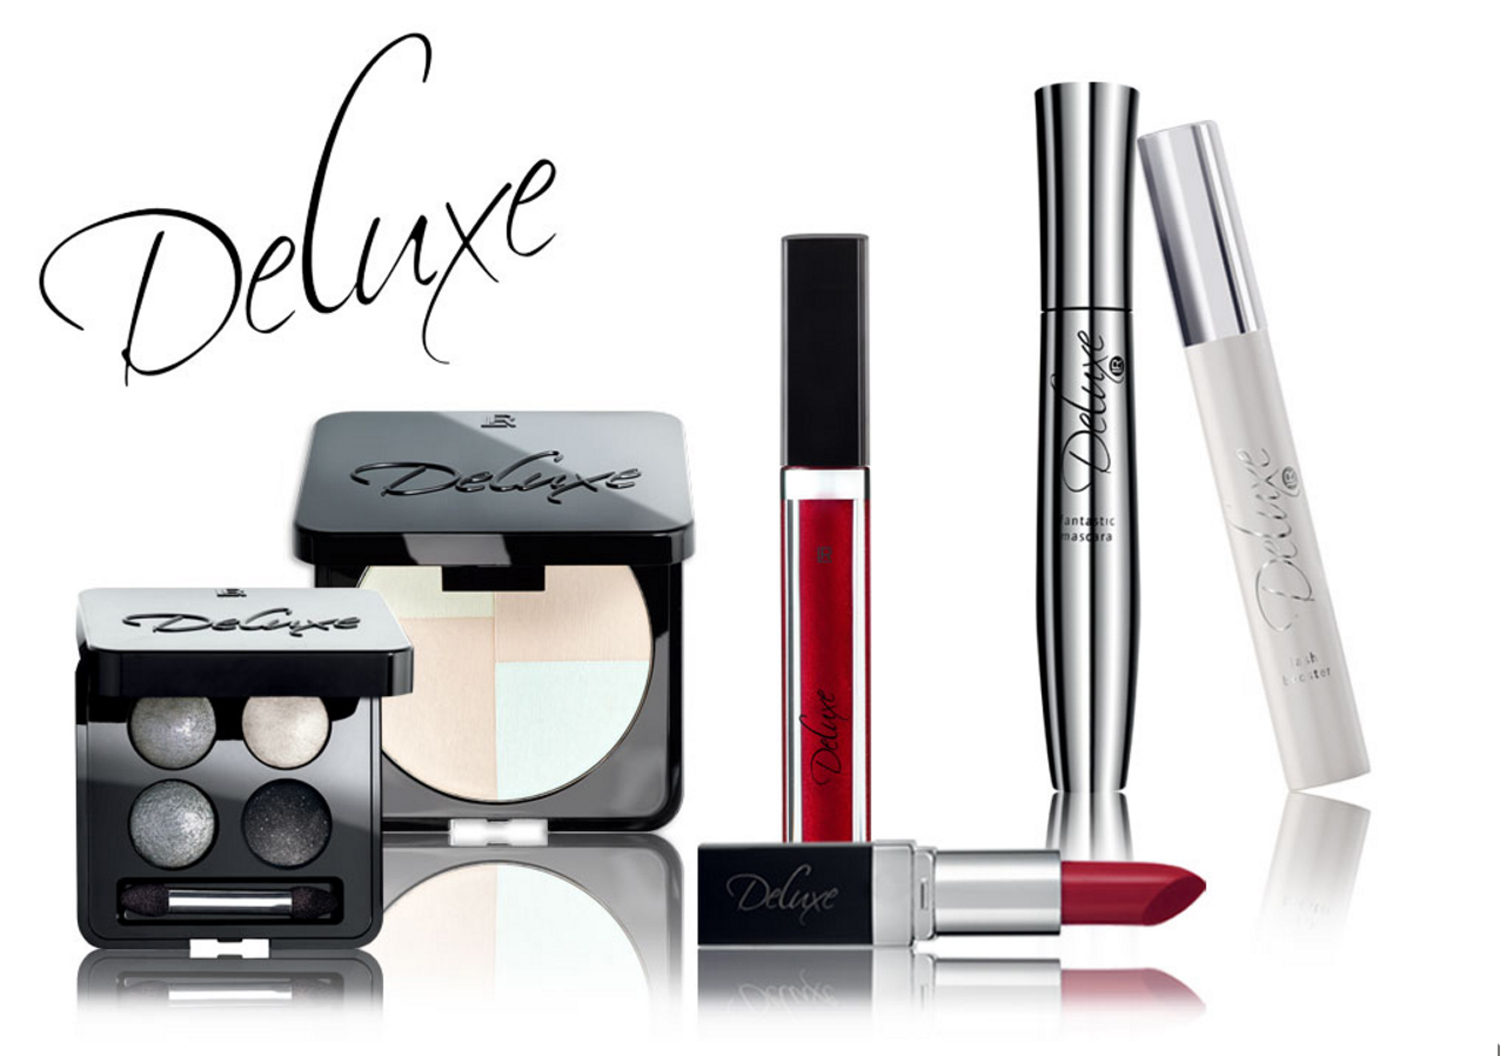 Deluxe_makeup_kosmetik